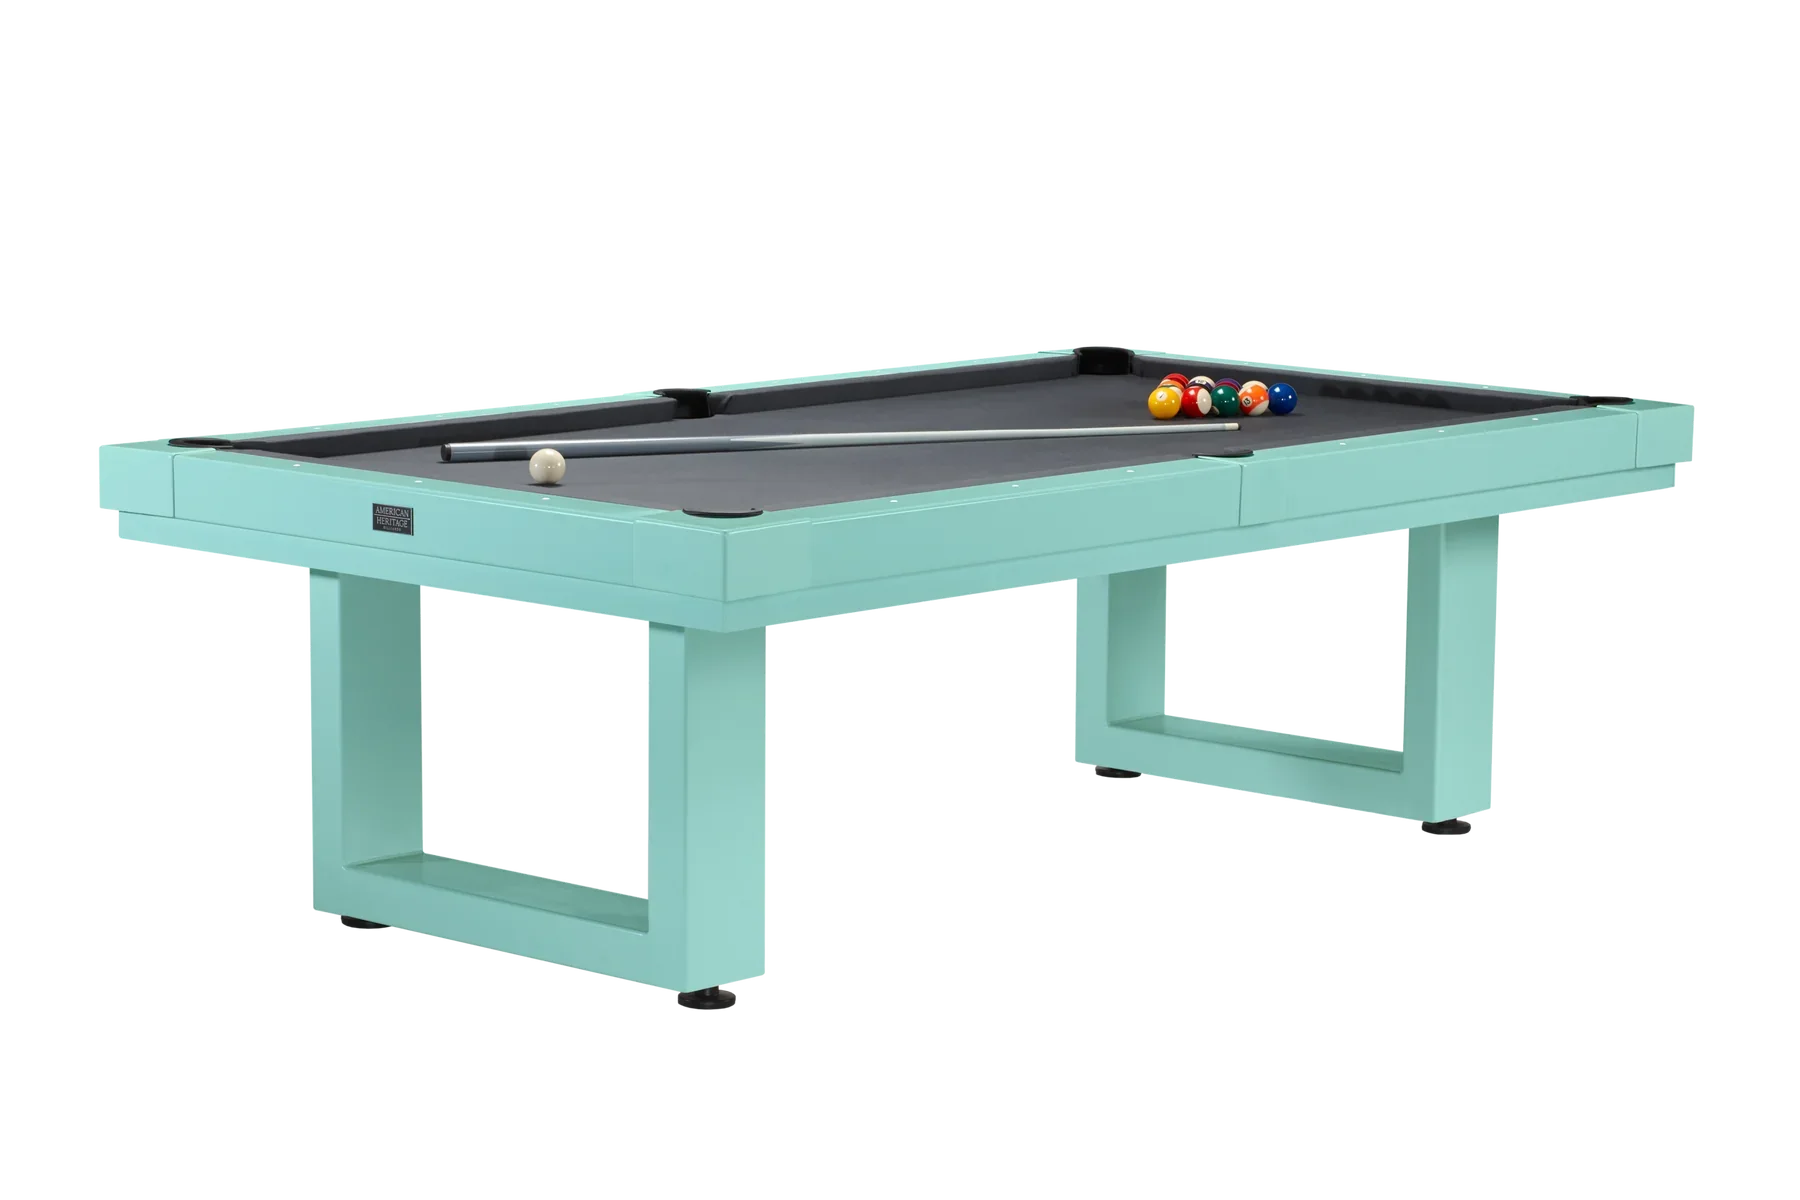 American Heritage Billiards Lanai 8' Outdoor Slate Pool Table In Seafoam Teal